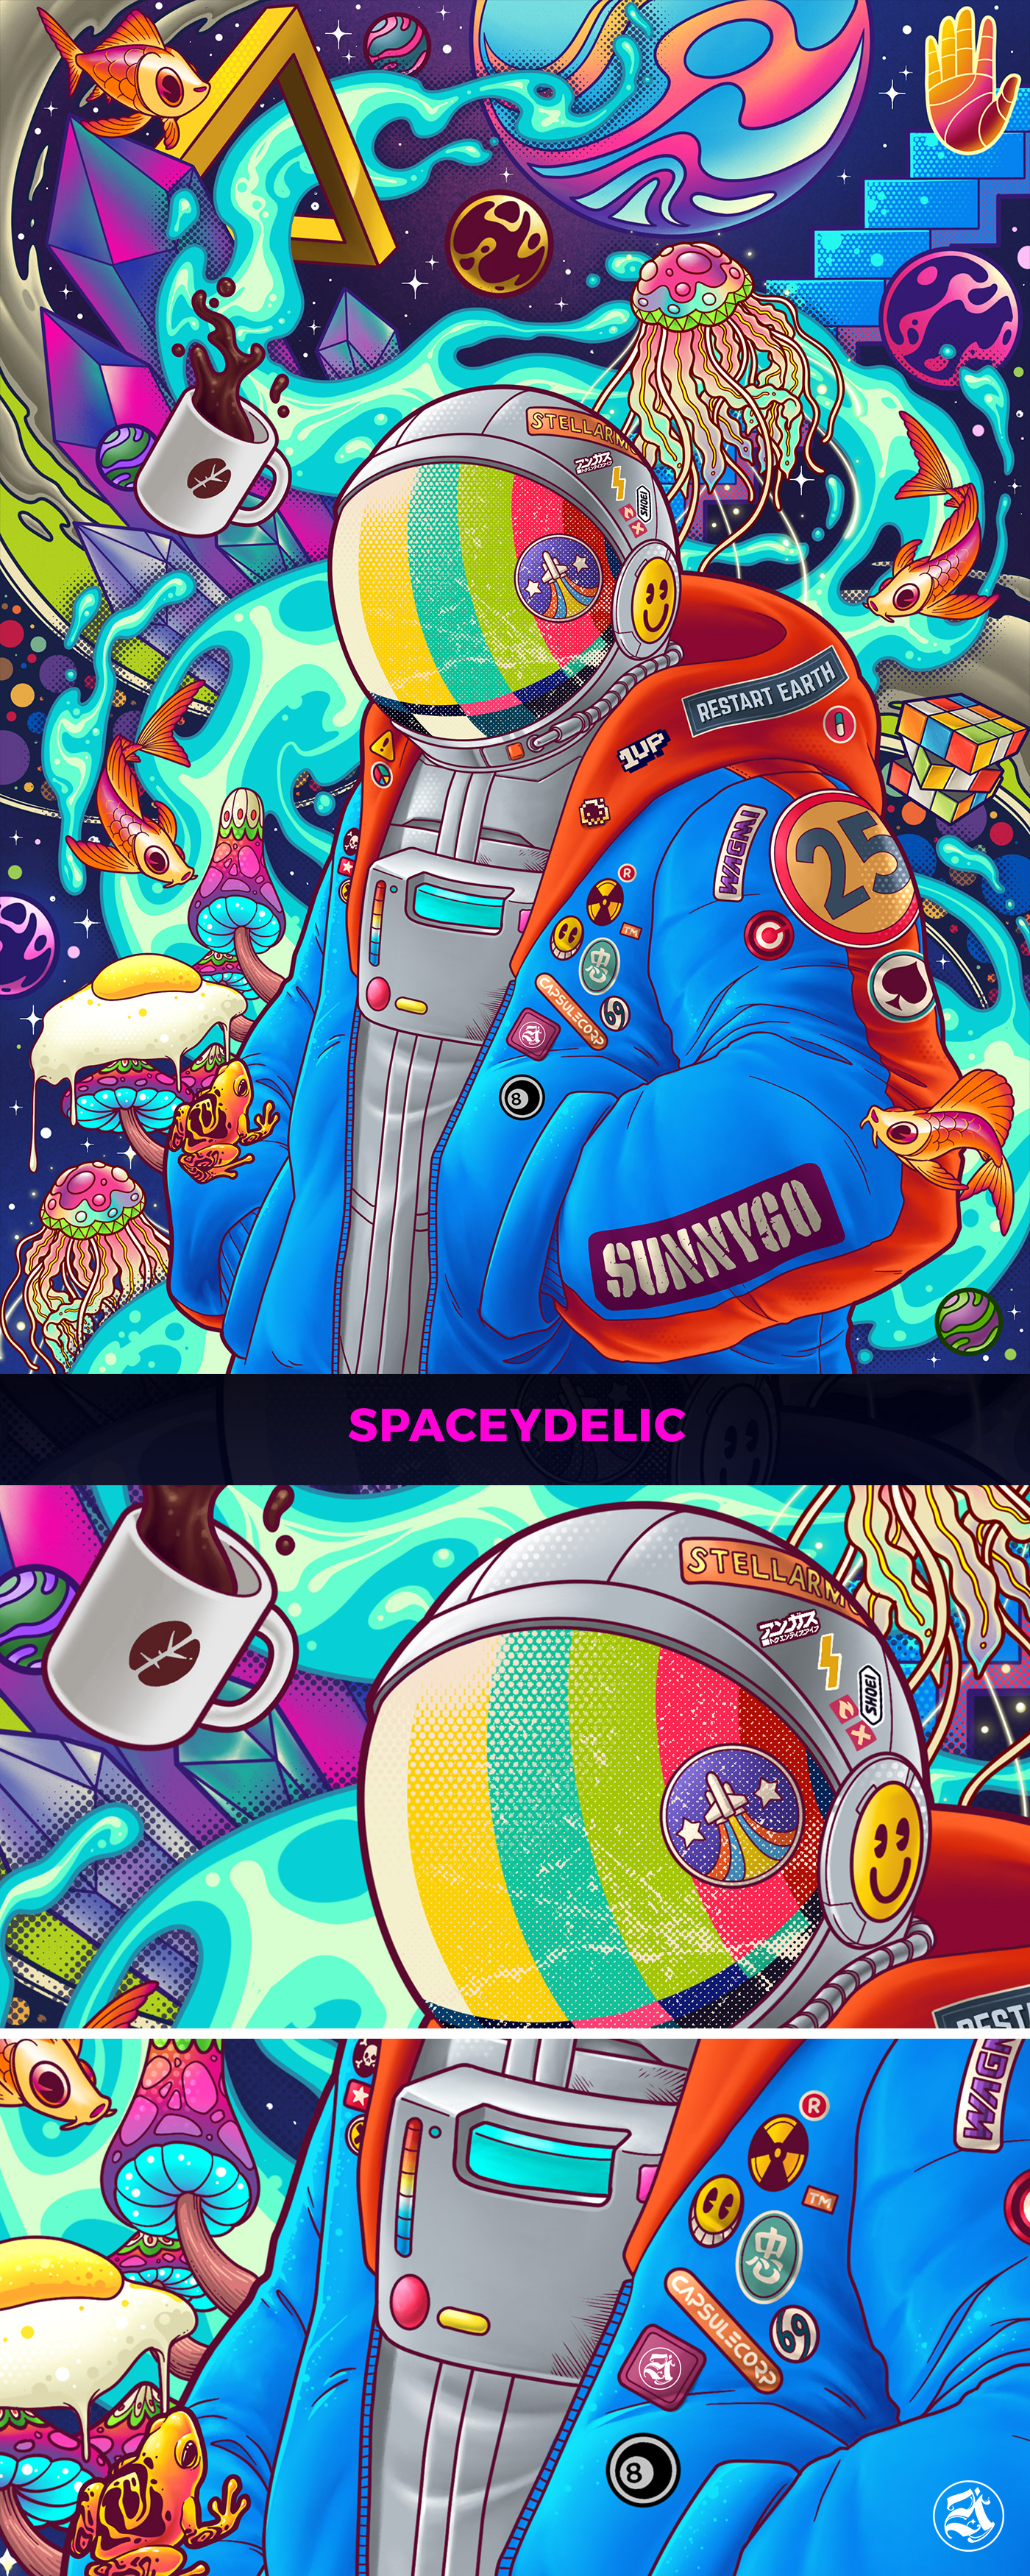 astronaut cosmonaut Space  universe psychedelic Digital Art  ILLUSTRATION  artwork Scifi imaginary